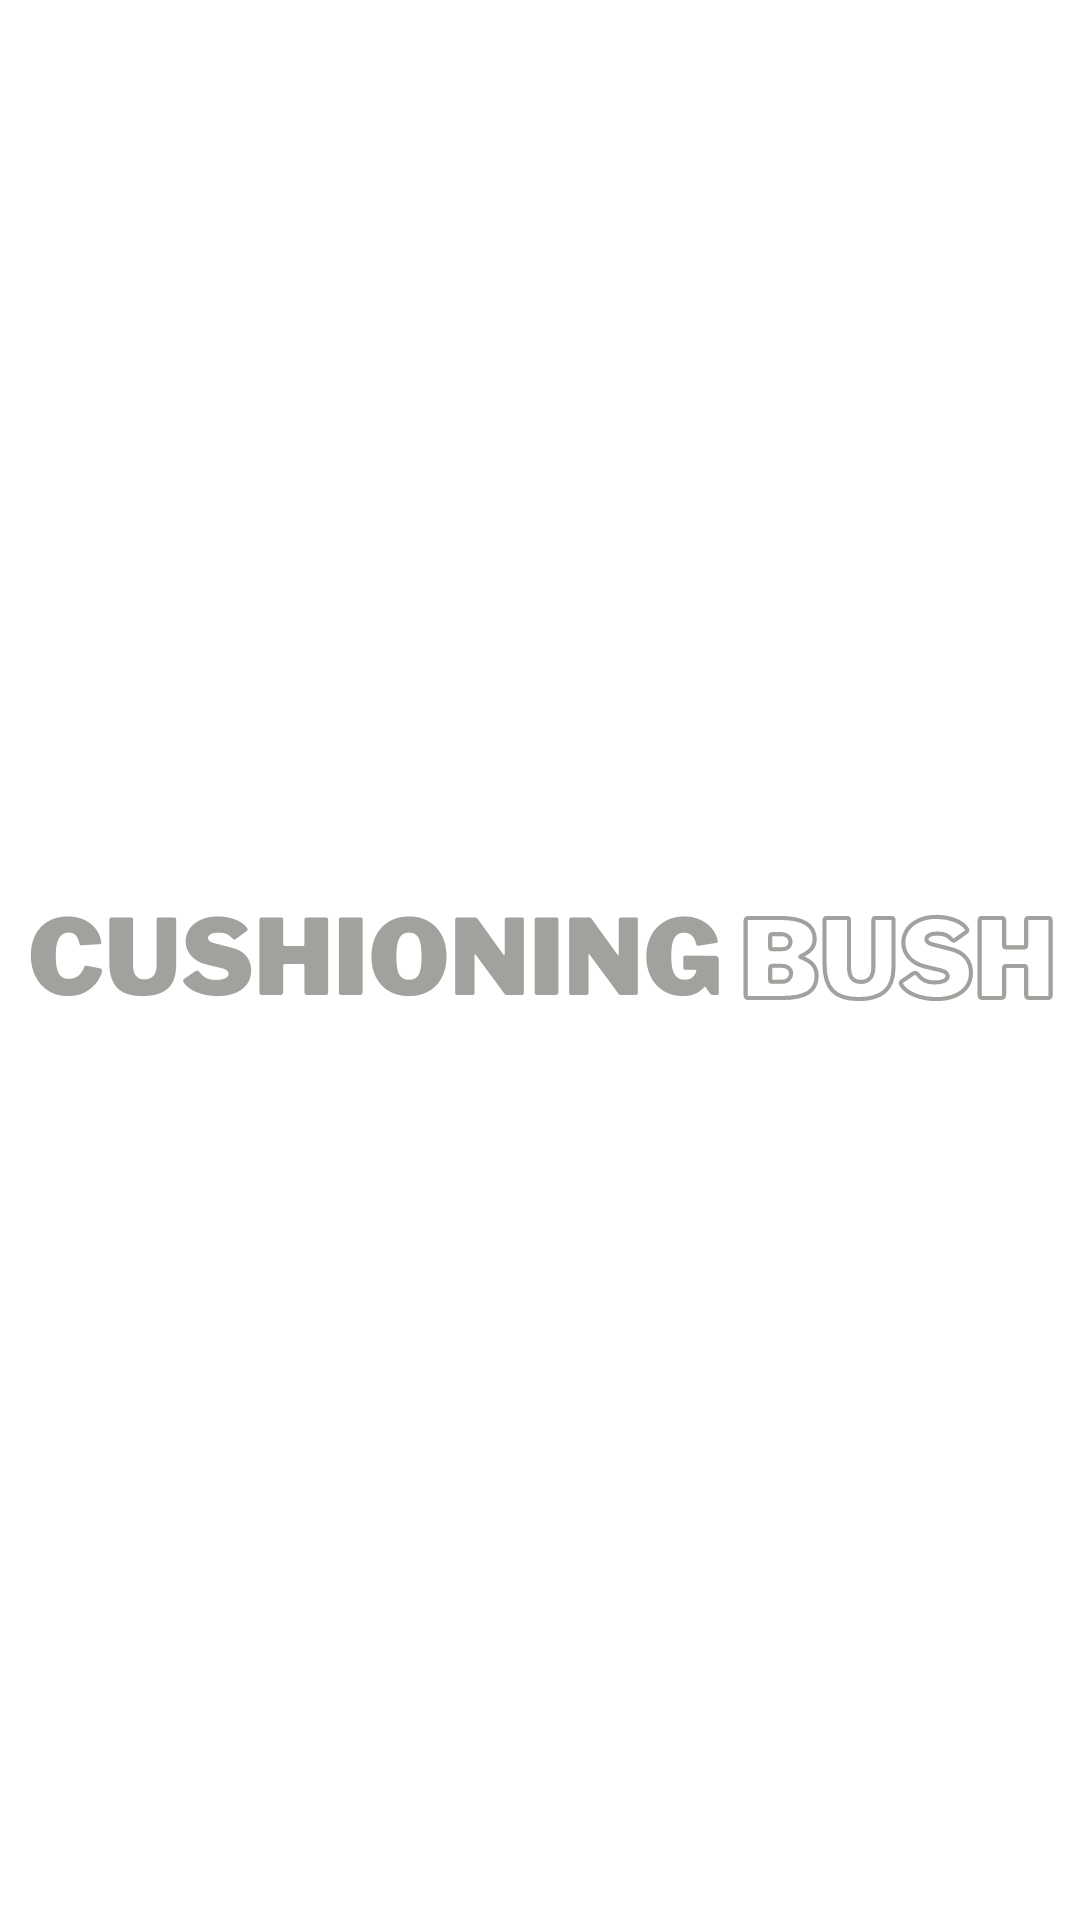 Cushioning Bush Title